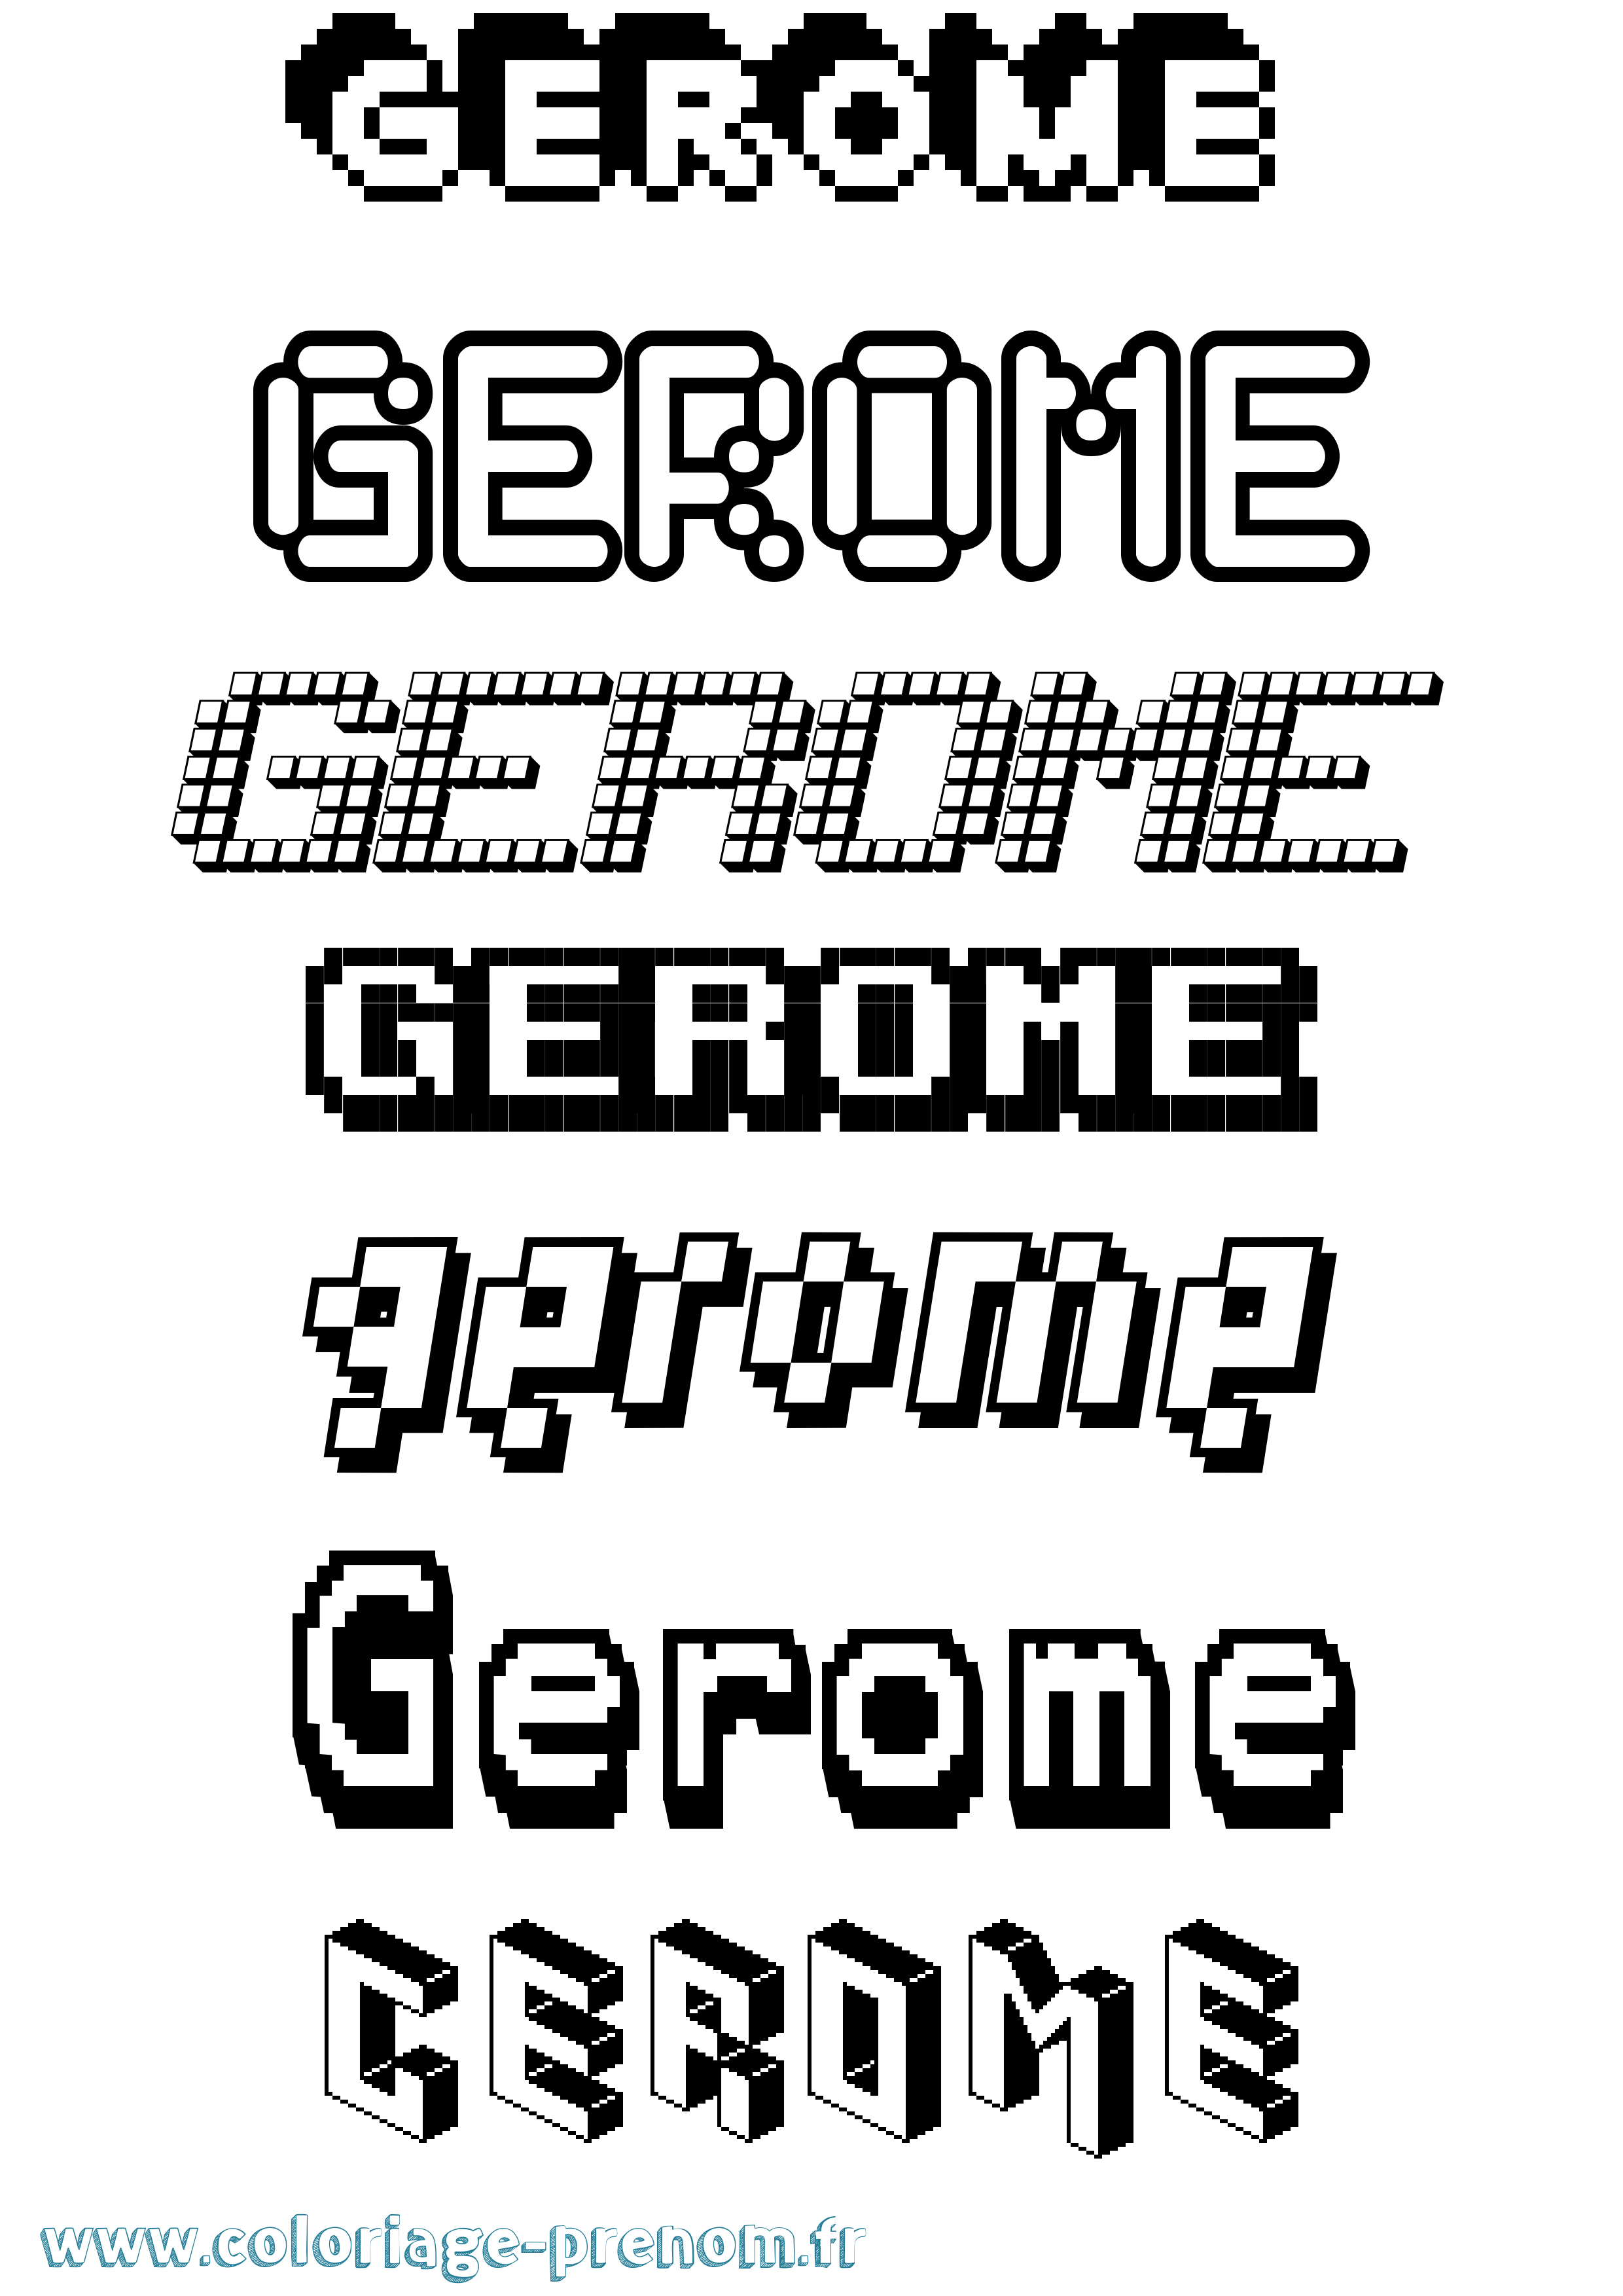 Coloriage prénom Gerome Pixel